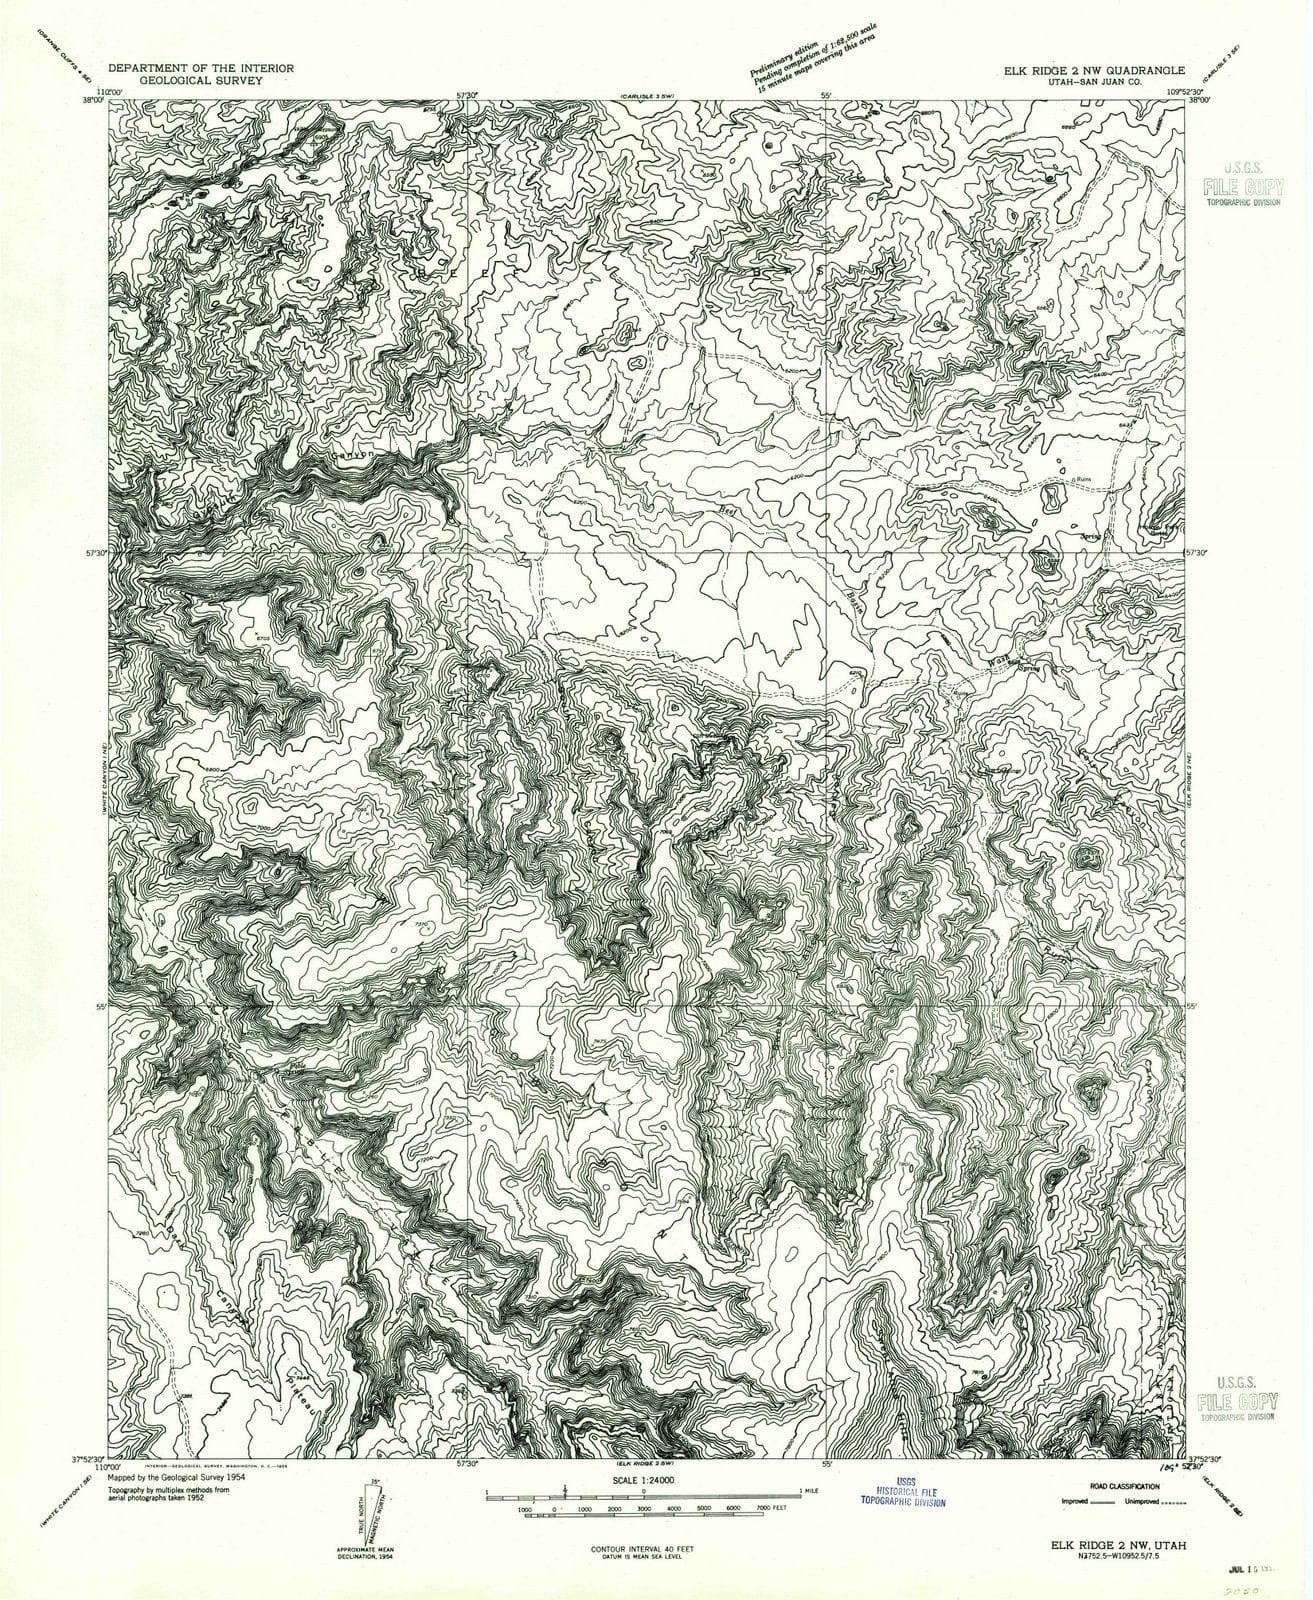 1954 Elk Ridge 2, UT - Utah - USGS Topographic Map v2